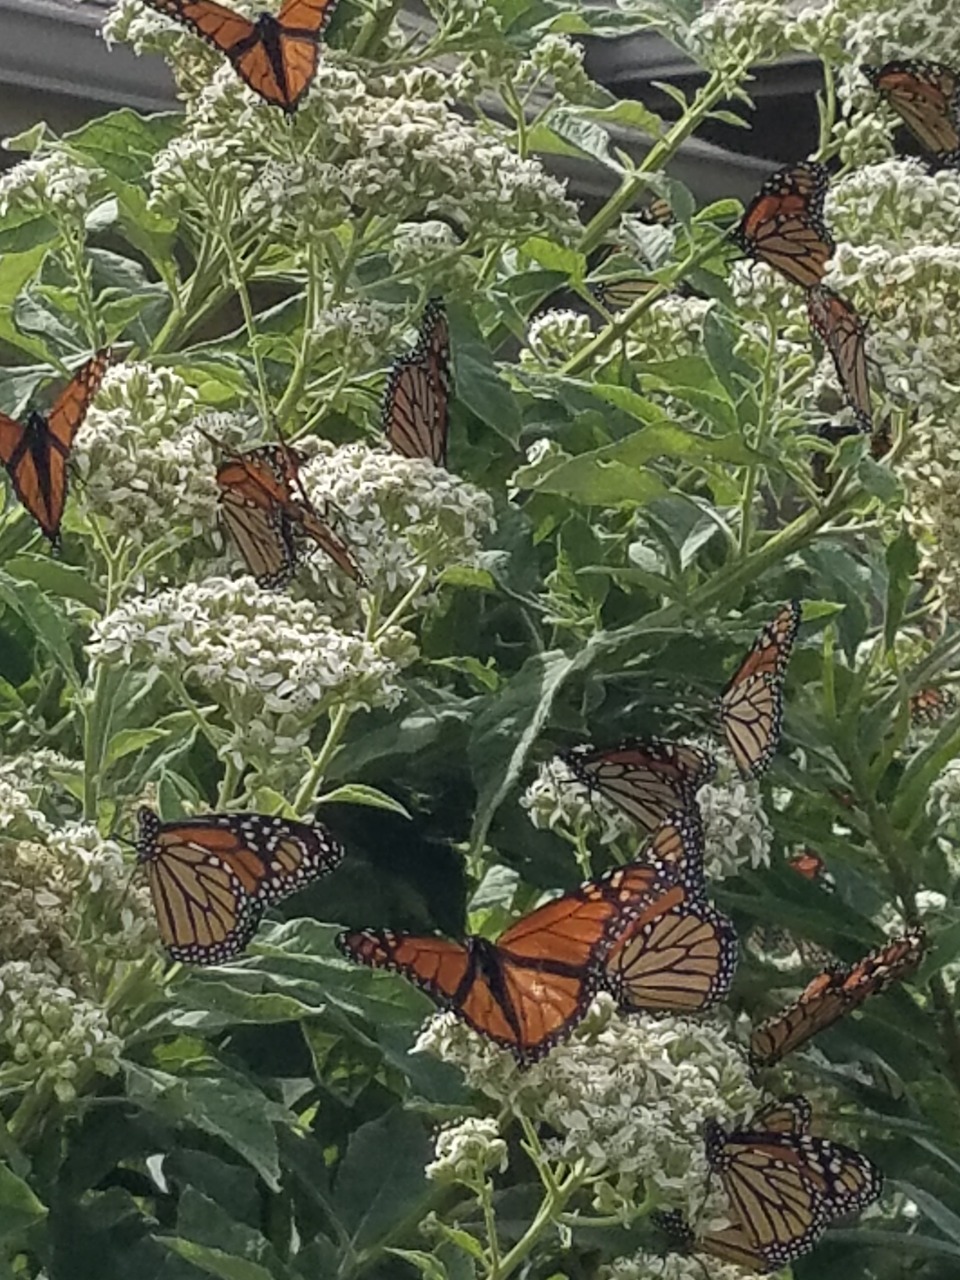 monarchs nectaring